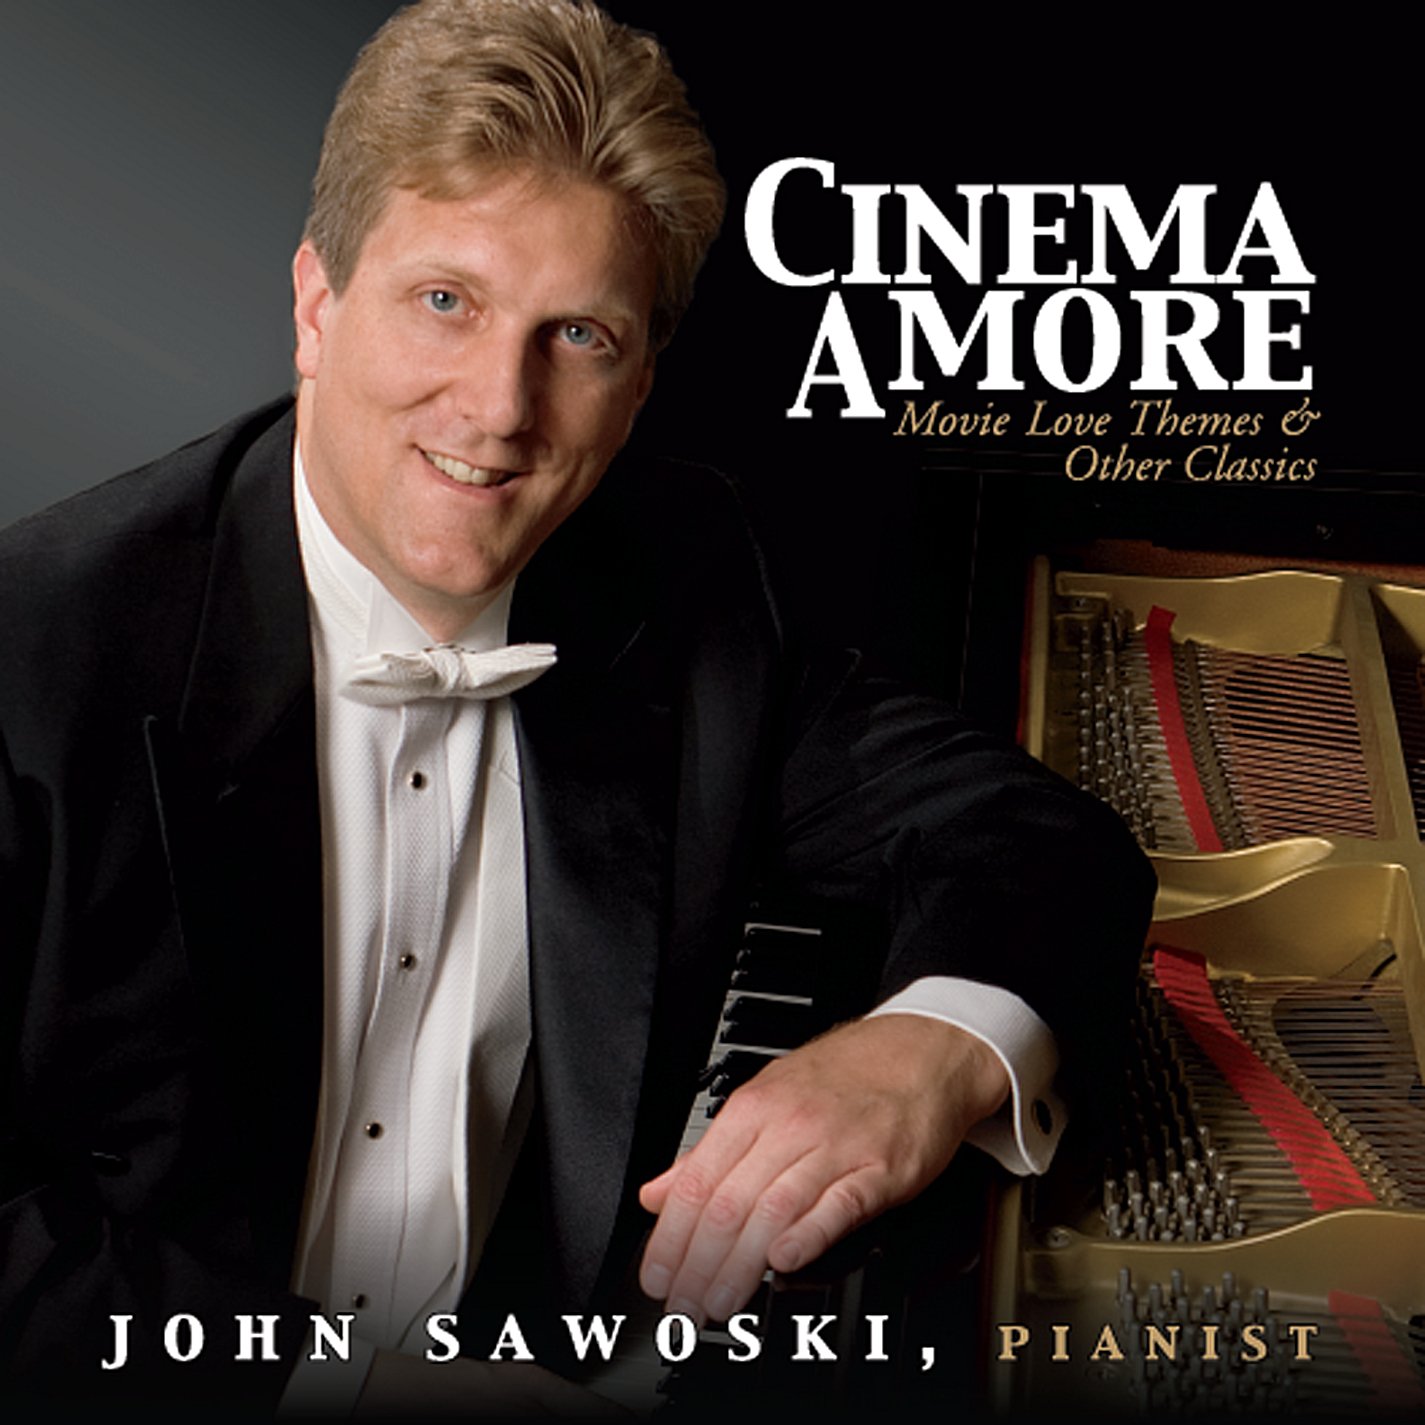 Cinema Amore CD and Free Sample